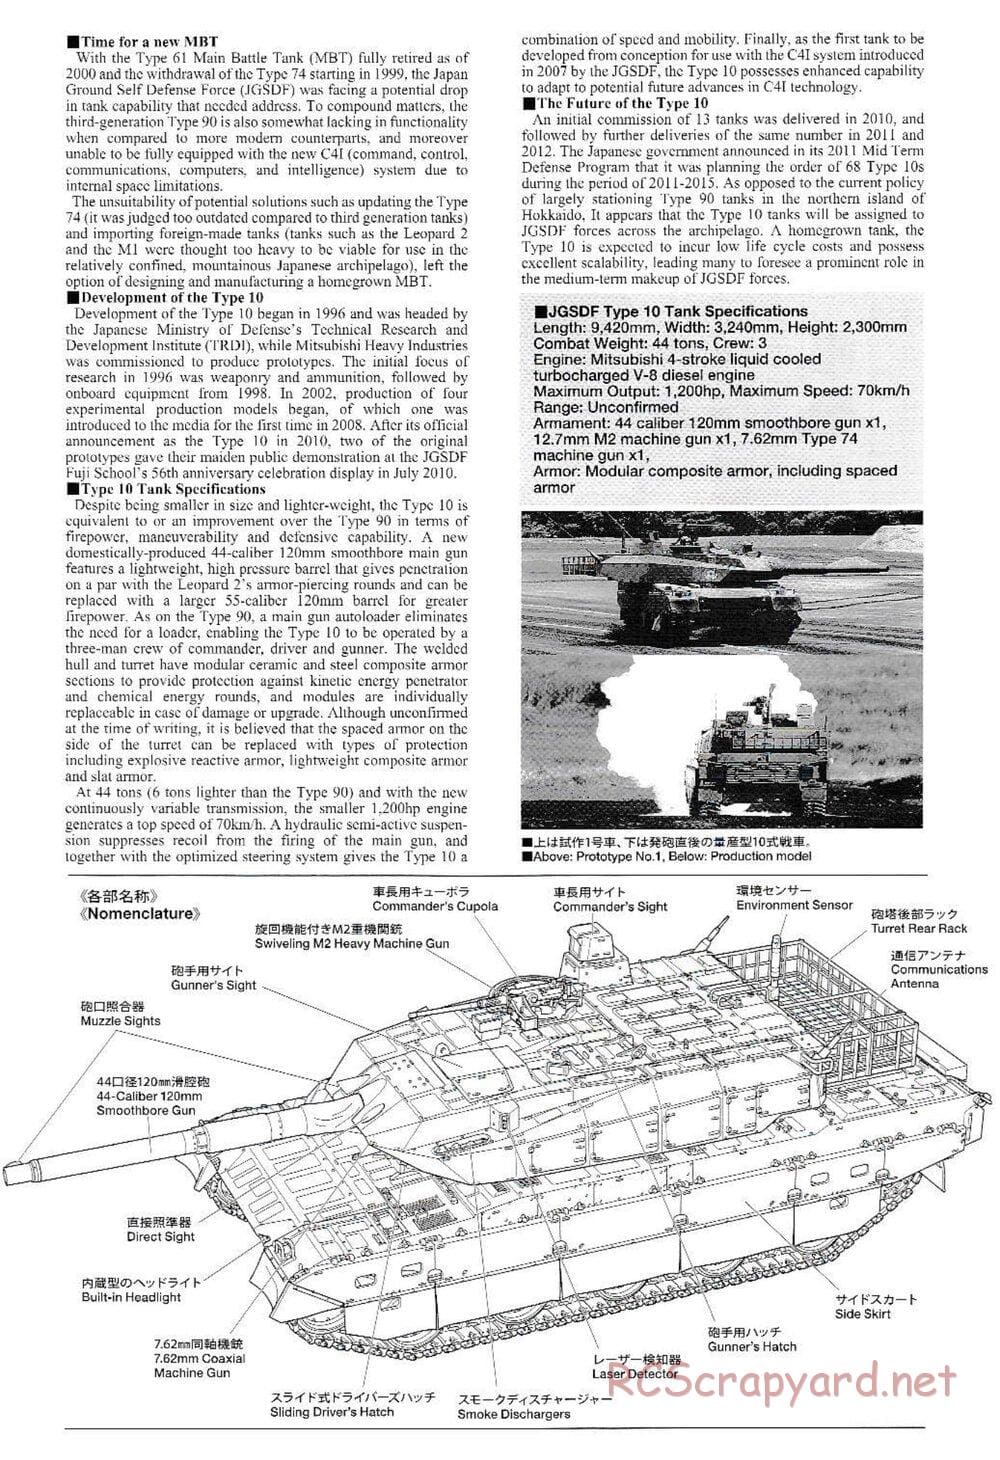 Tamiya - JGSDF Type 10 Tank - 1/35 Scale Body - Manual - Page 3